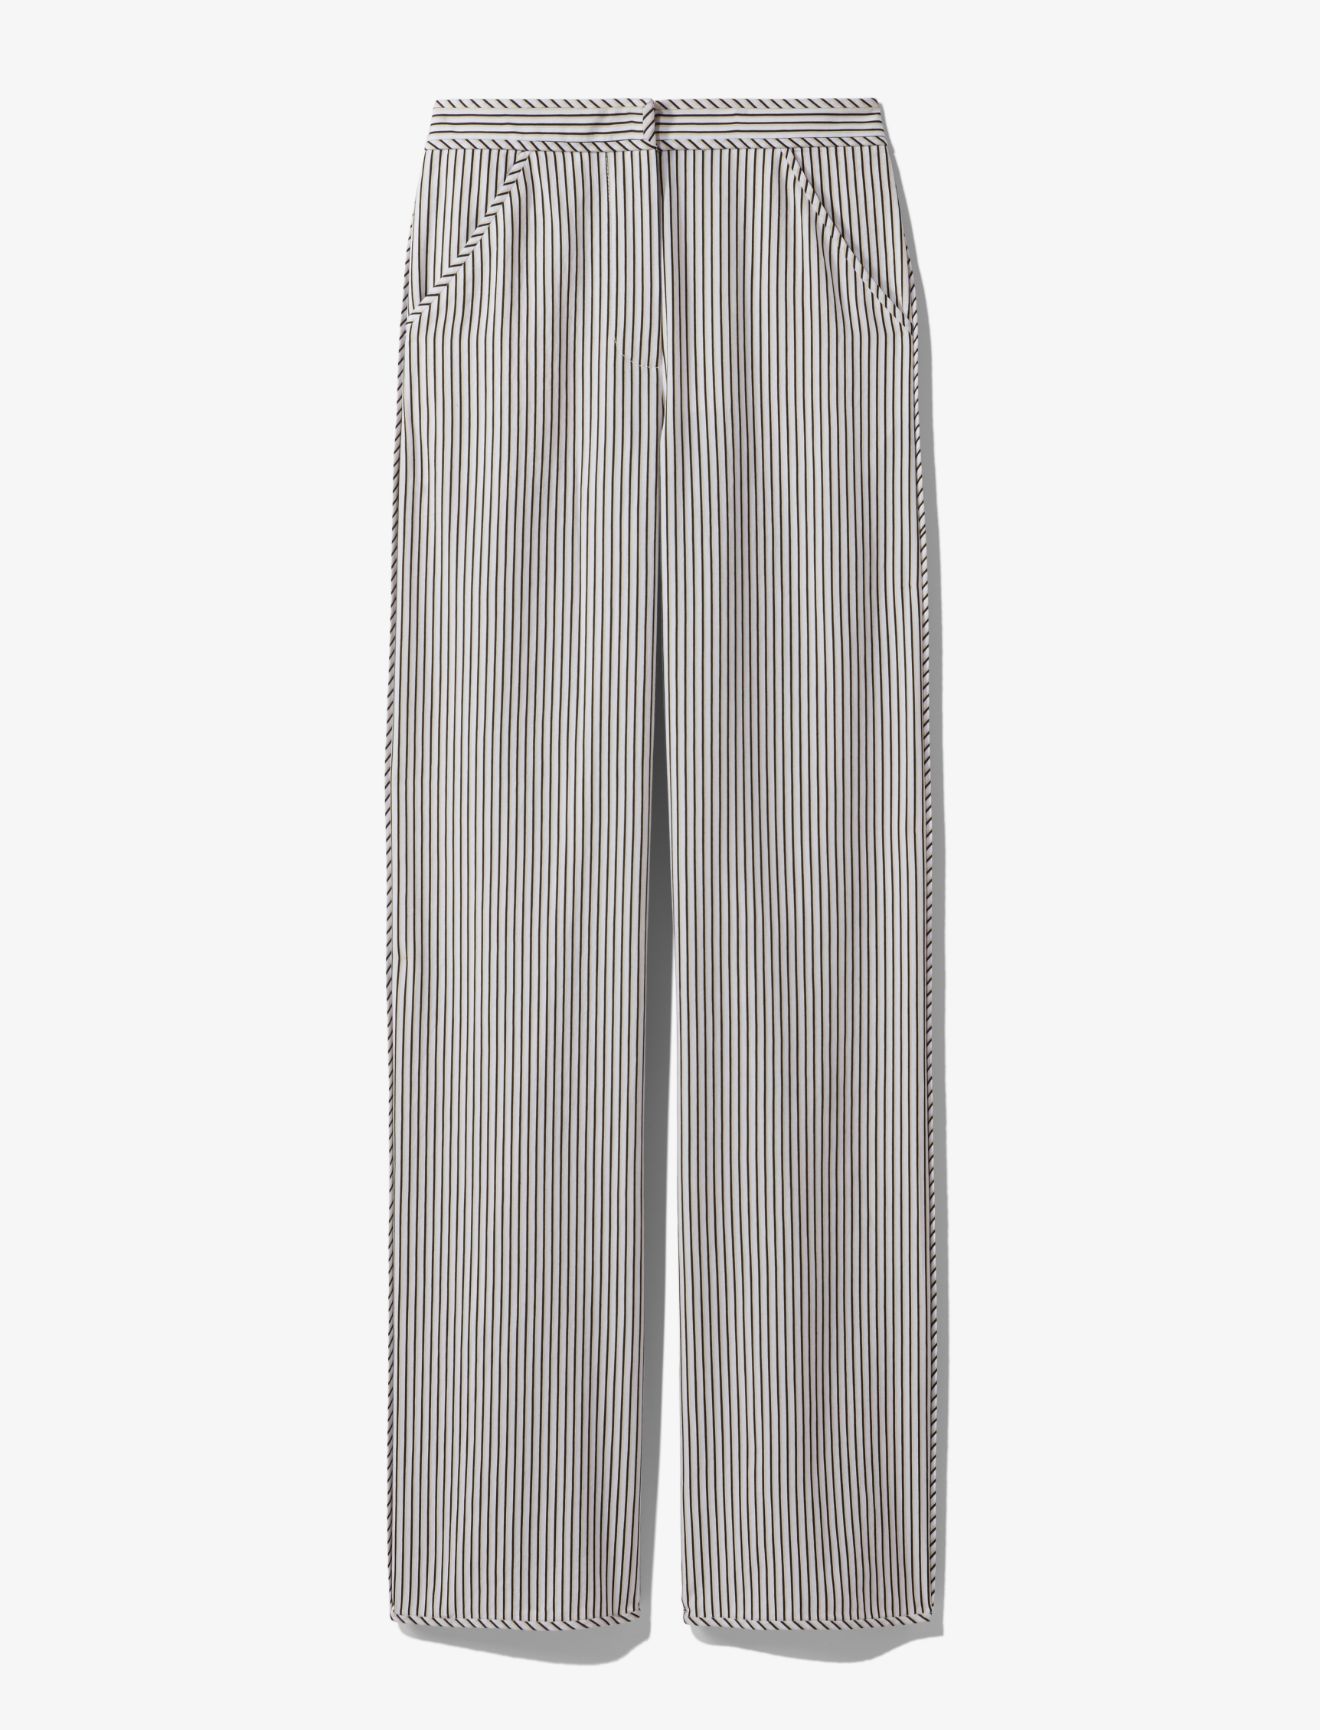 Striped Pajama Pants in white | Proenza Schouler